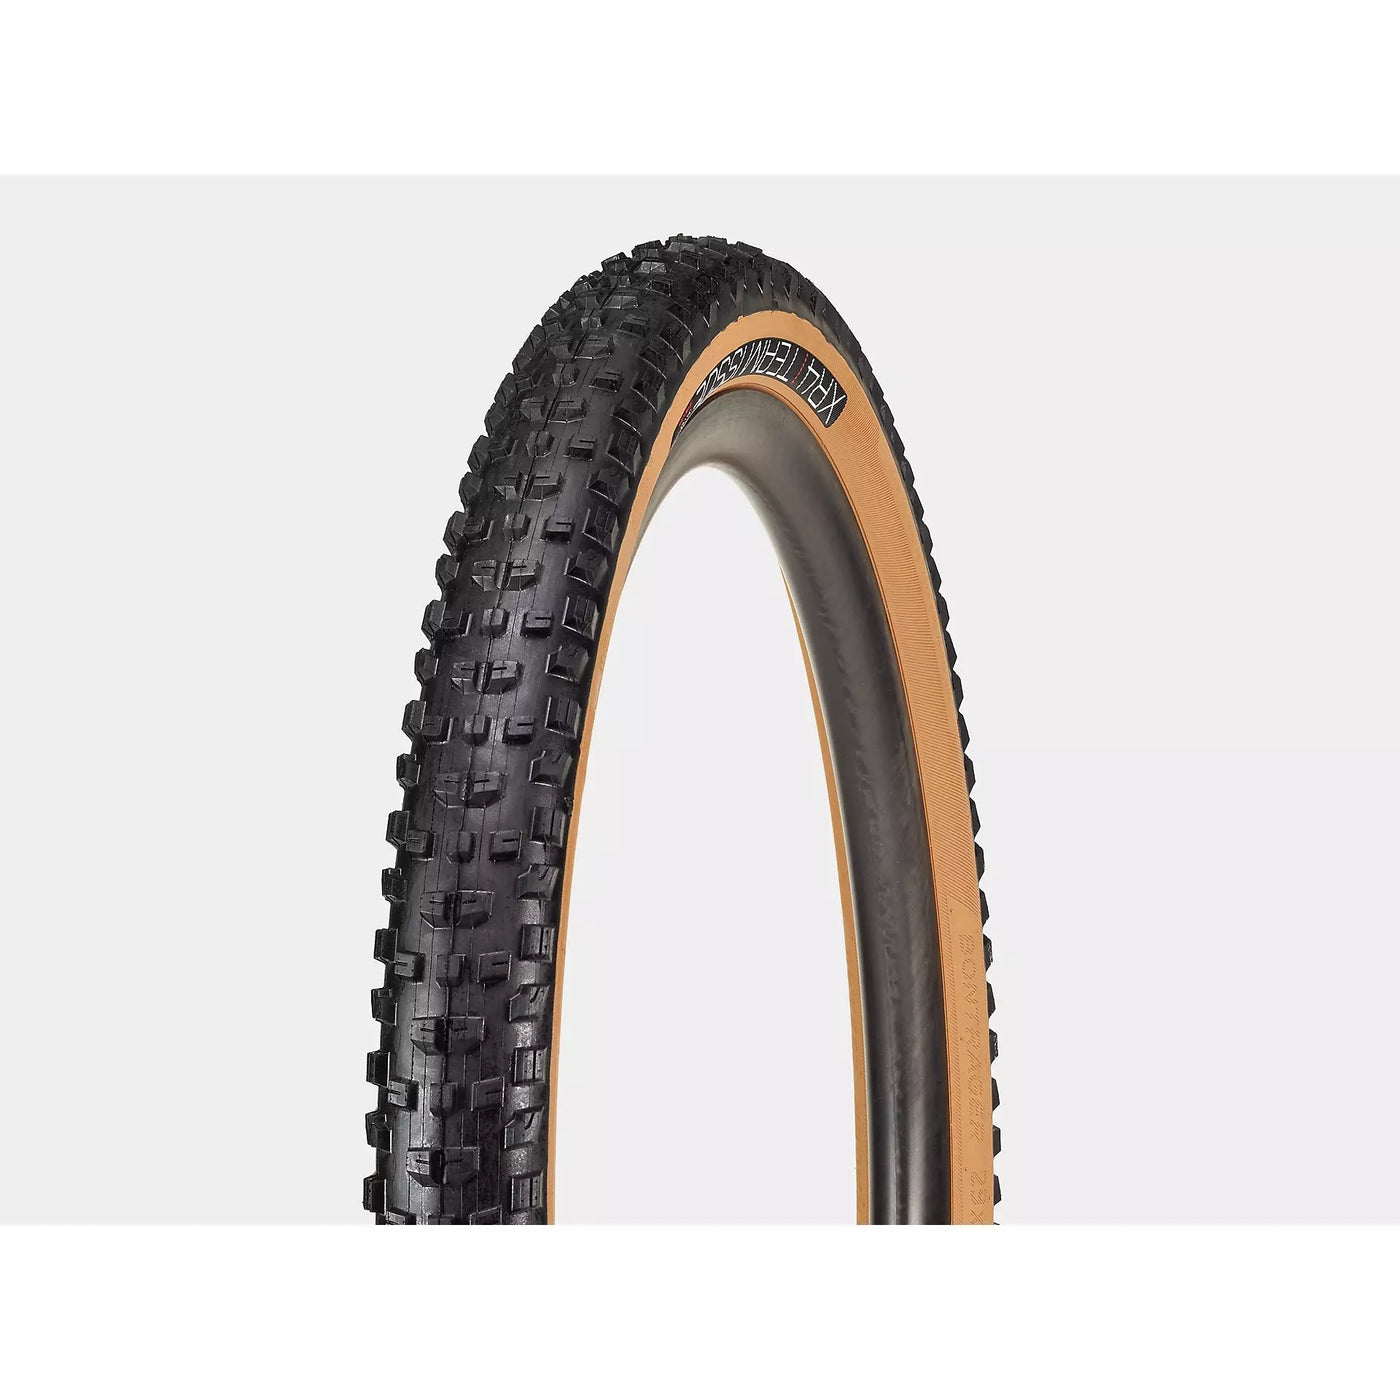 Bontrager XR4 Team Issue TLR MTB Tire 29" x 2.4" Black/Tan